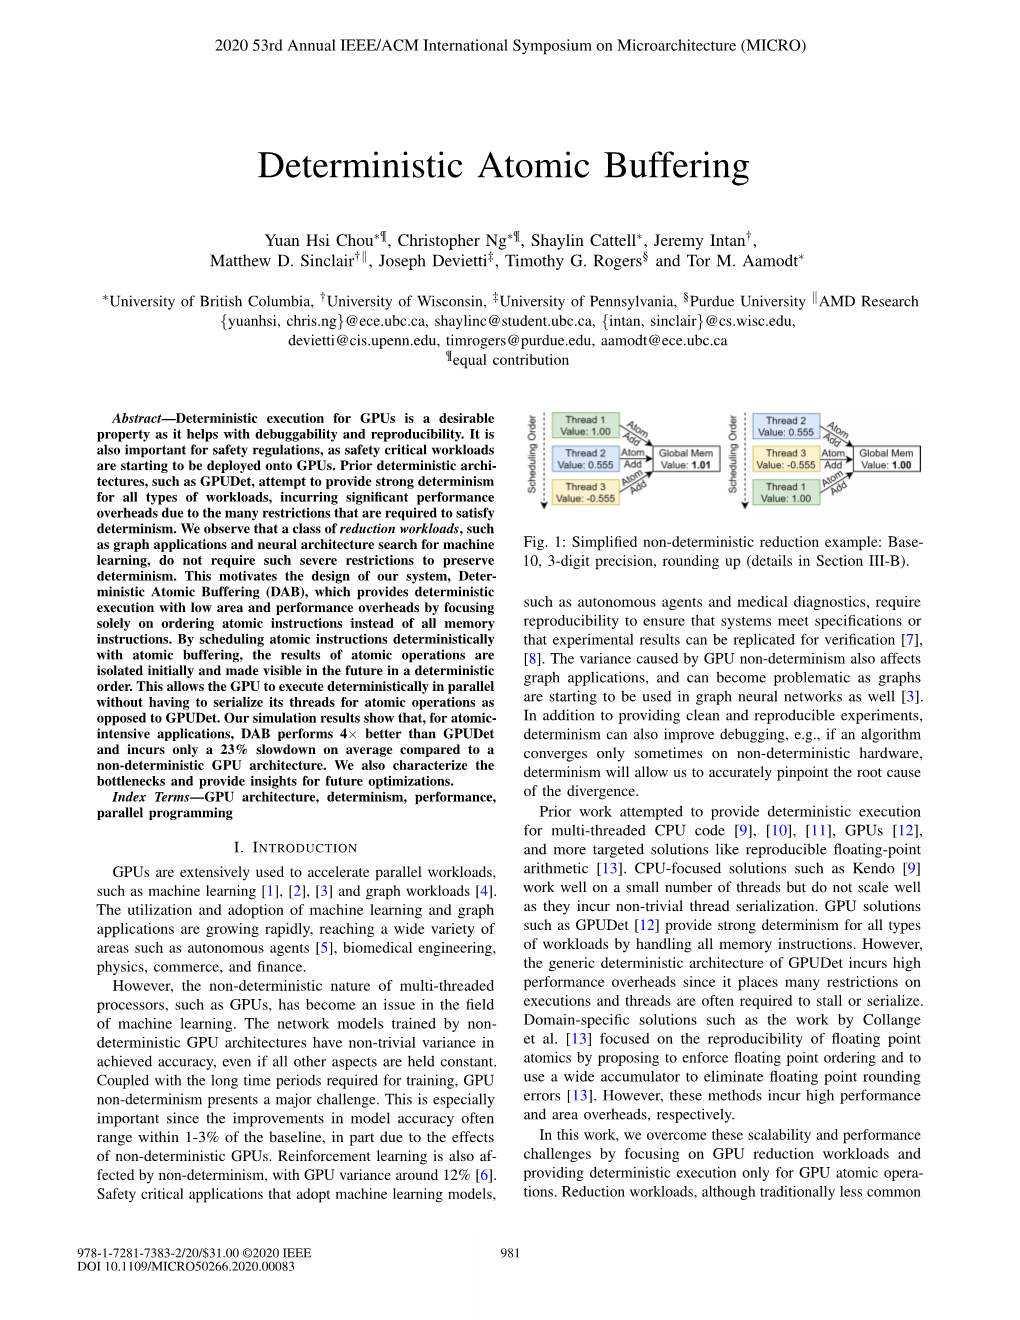 Deterministic Atomic Buffering